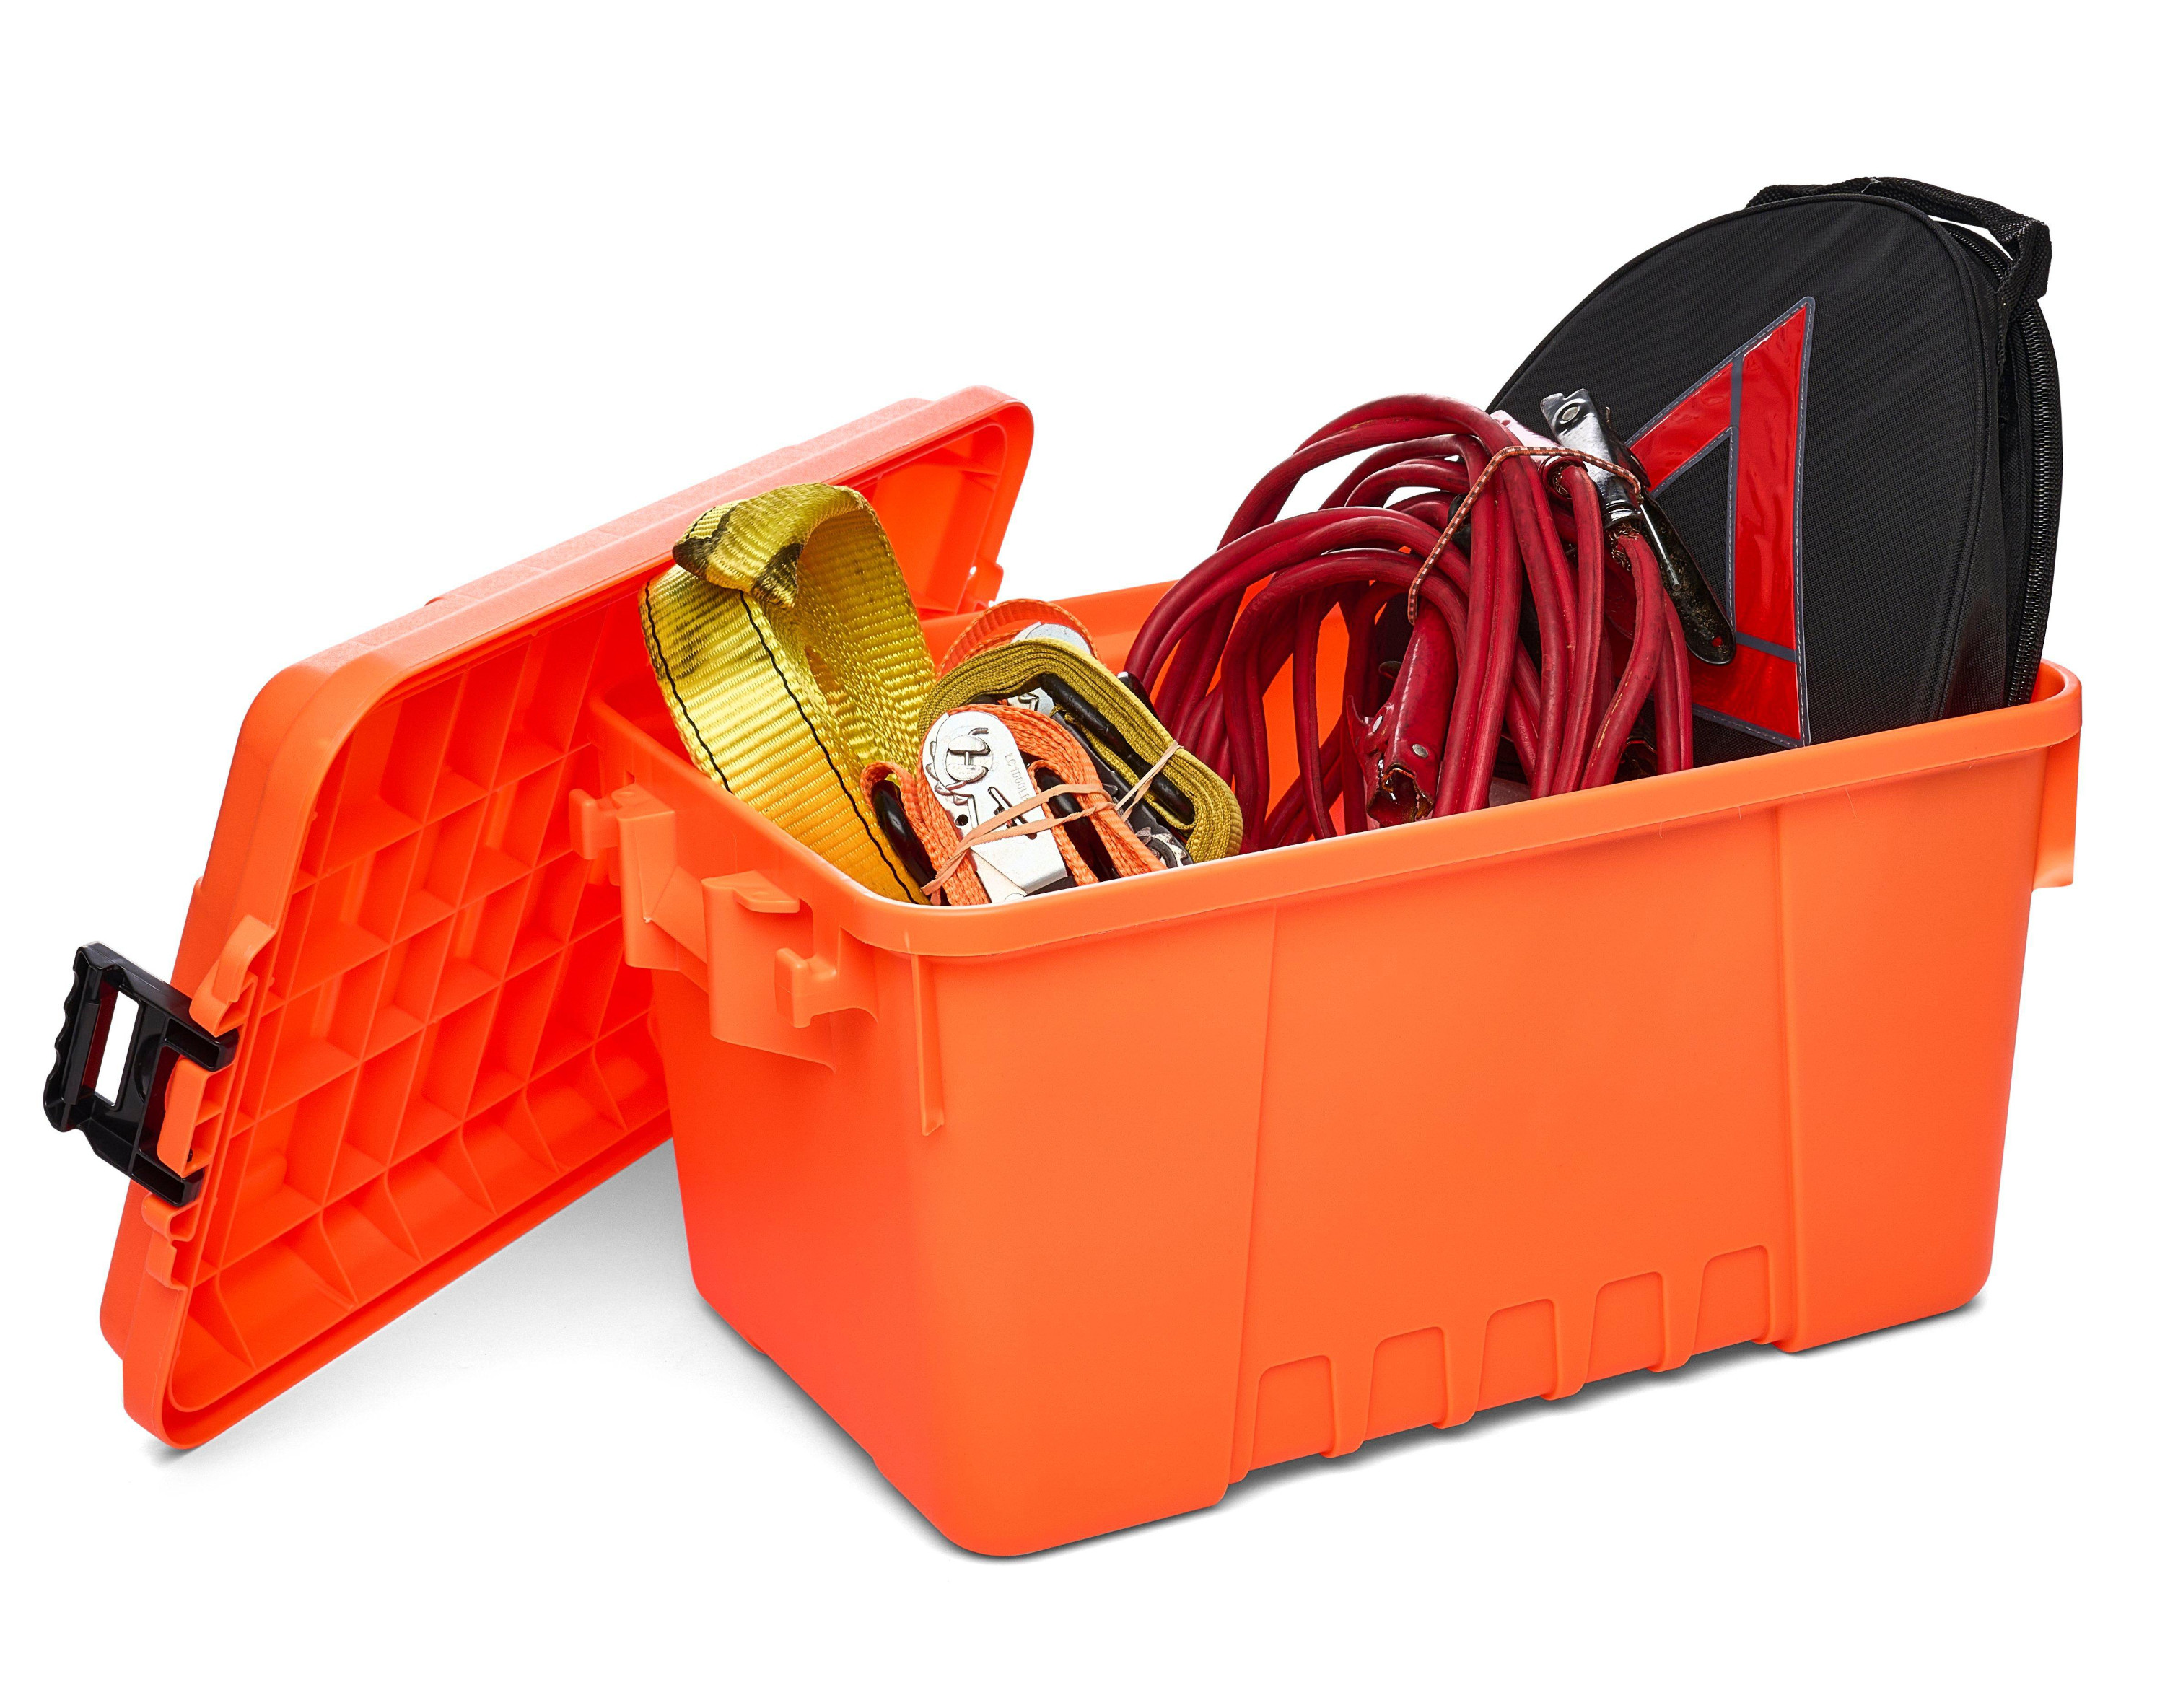 Plano Sportman's Trunk Small Caja de Pesca - Blaze Orange